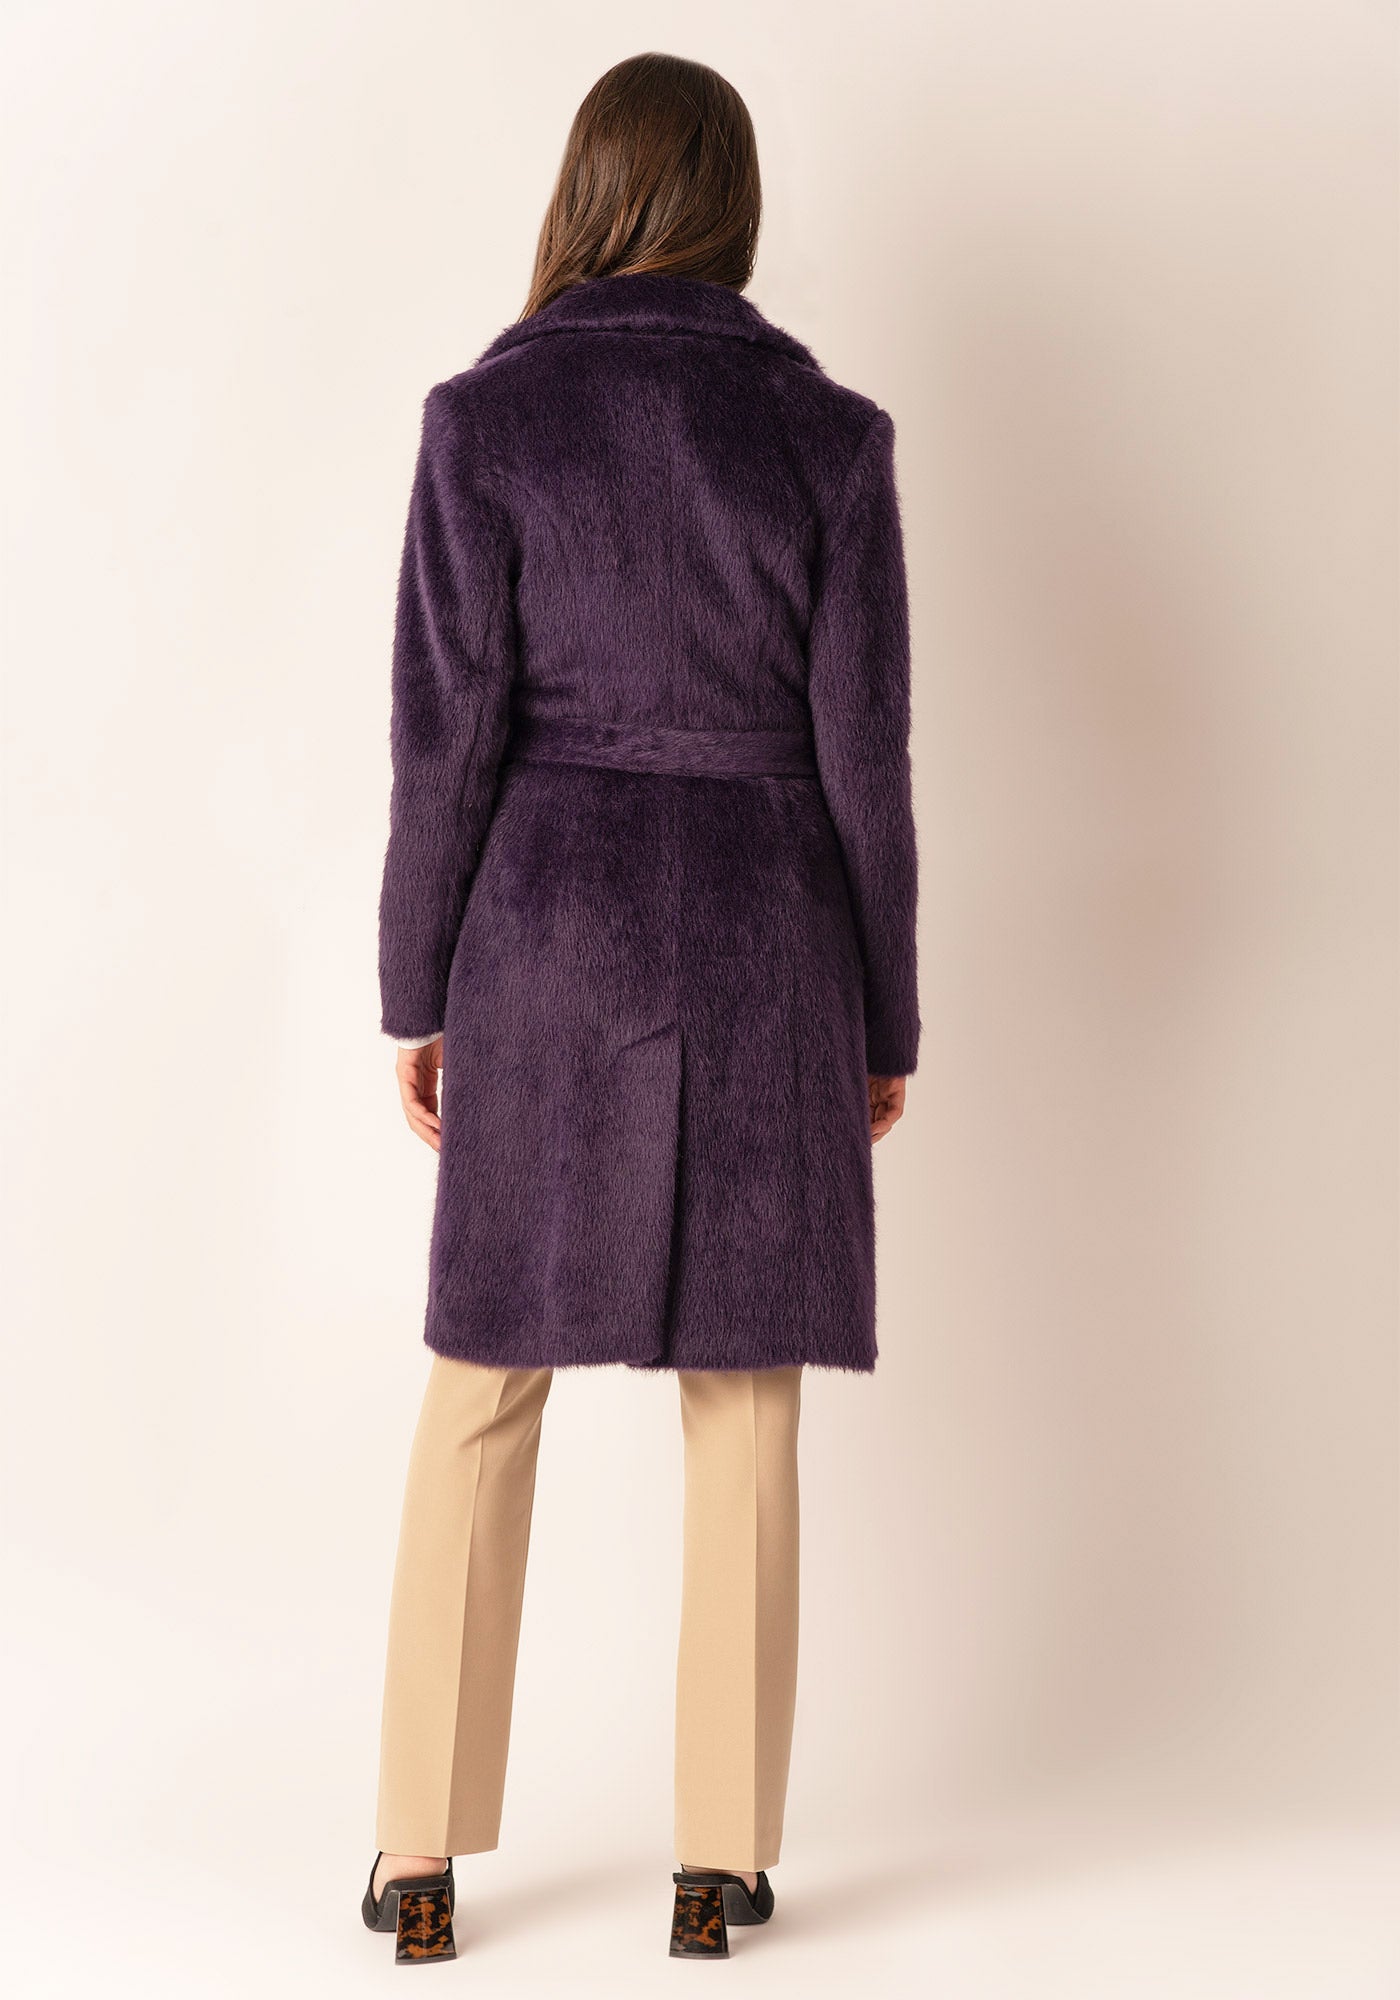 Women's Tailored Cashmere blend Coat in Plum